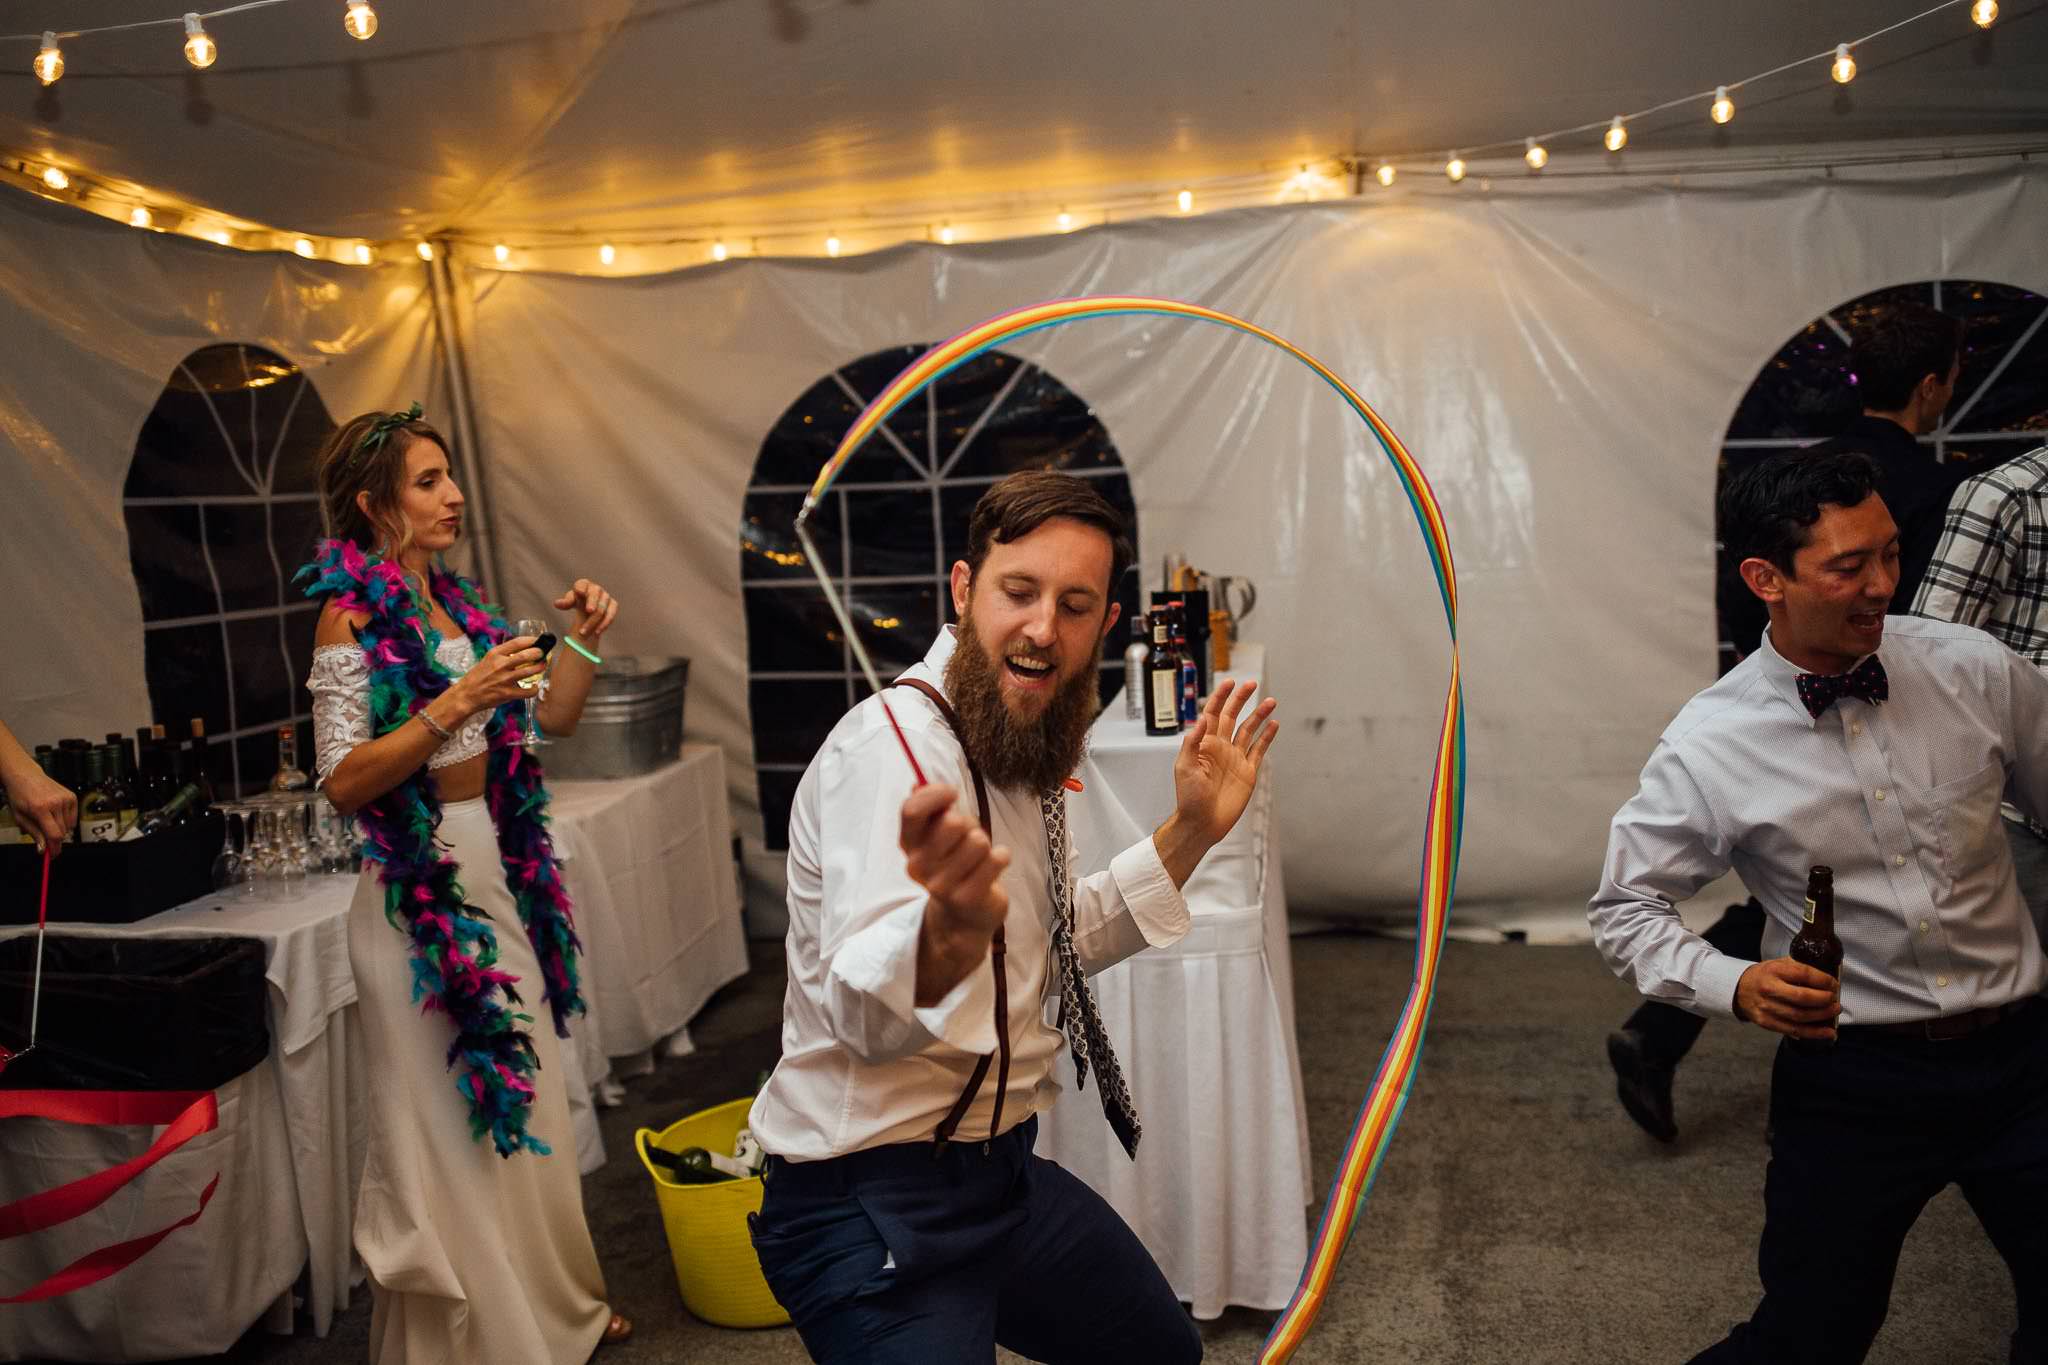 Guest dances with streamer at wedding reception Colorado Destination Wedding Photographer